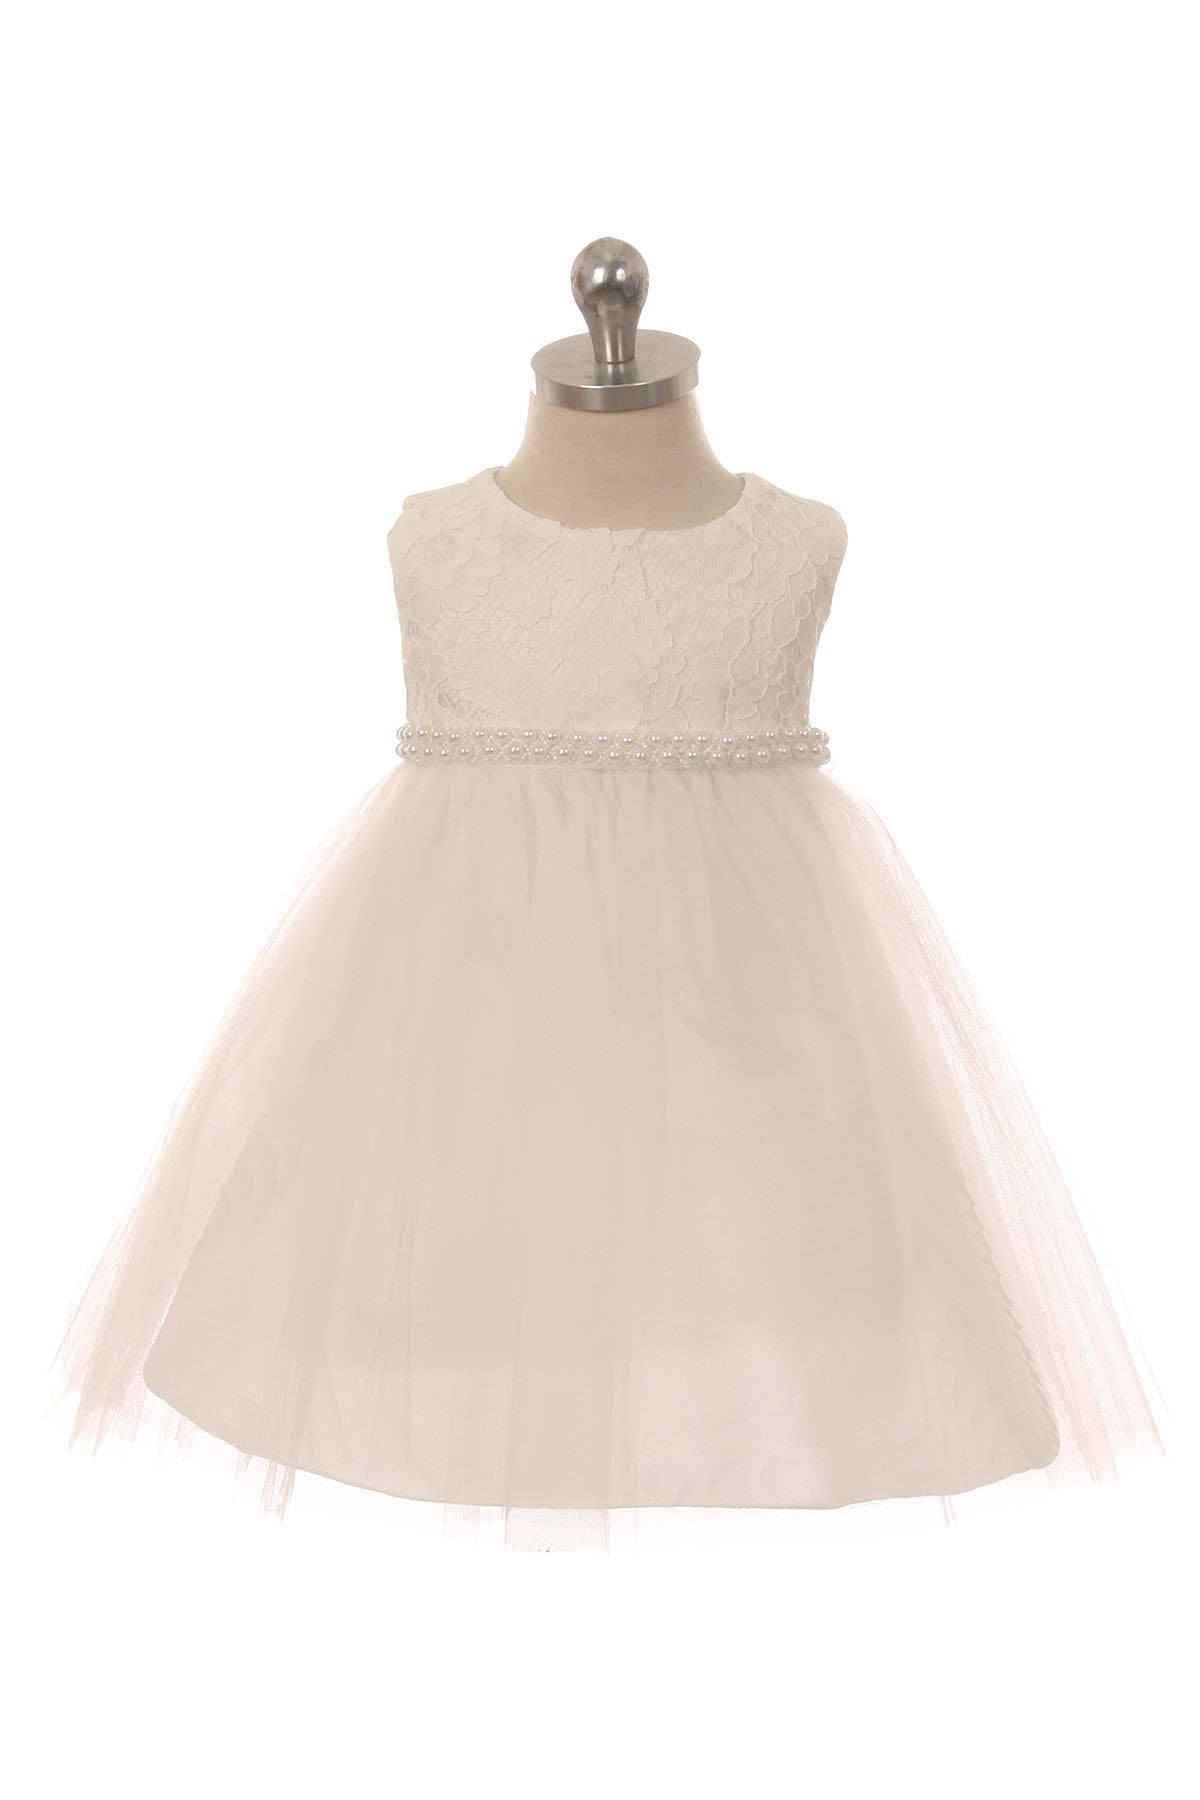 Dress - Lace Baby Dress W/ Thick Pearl Trim